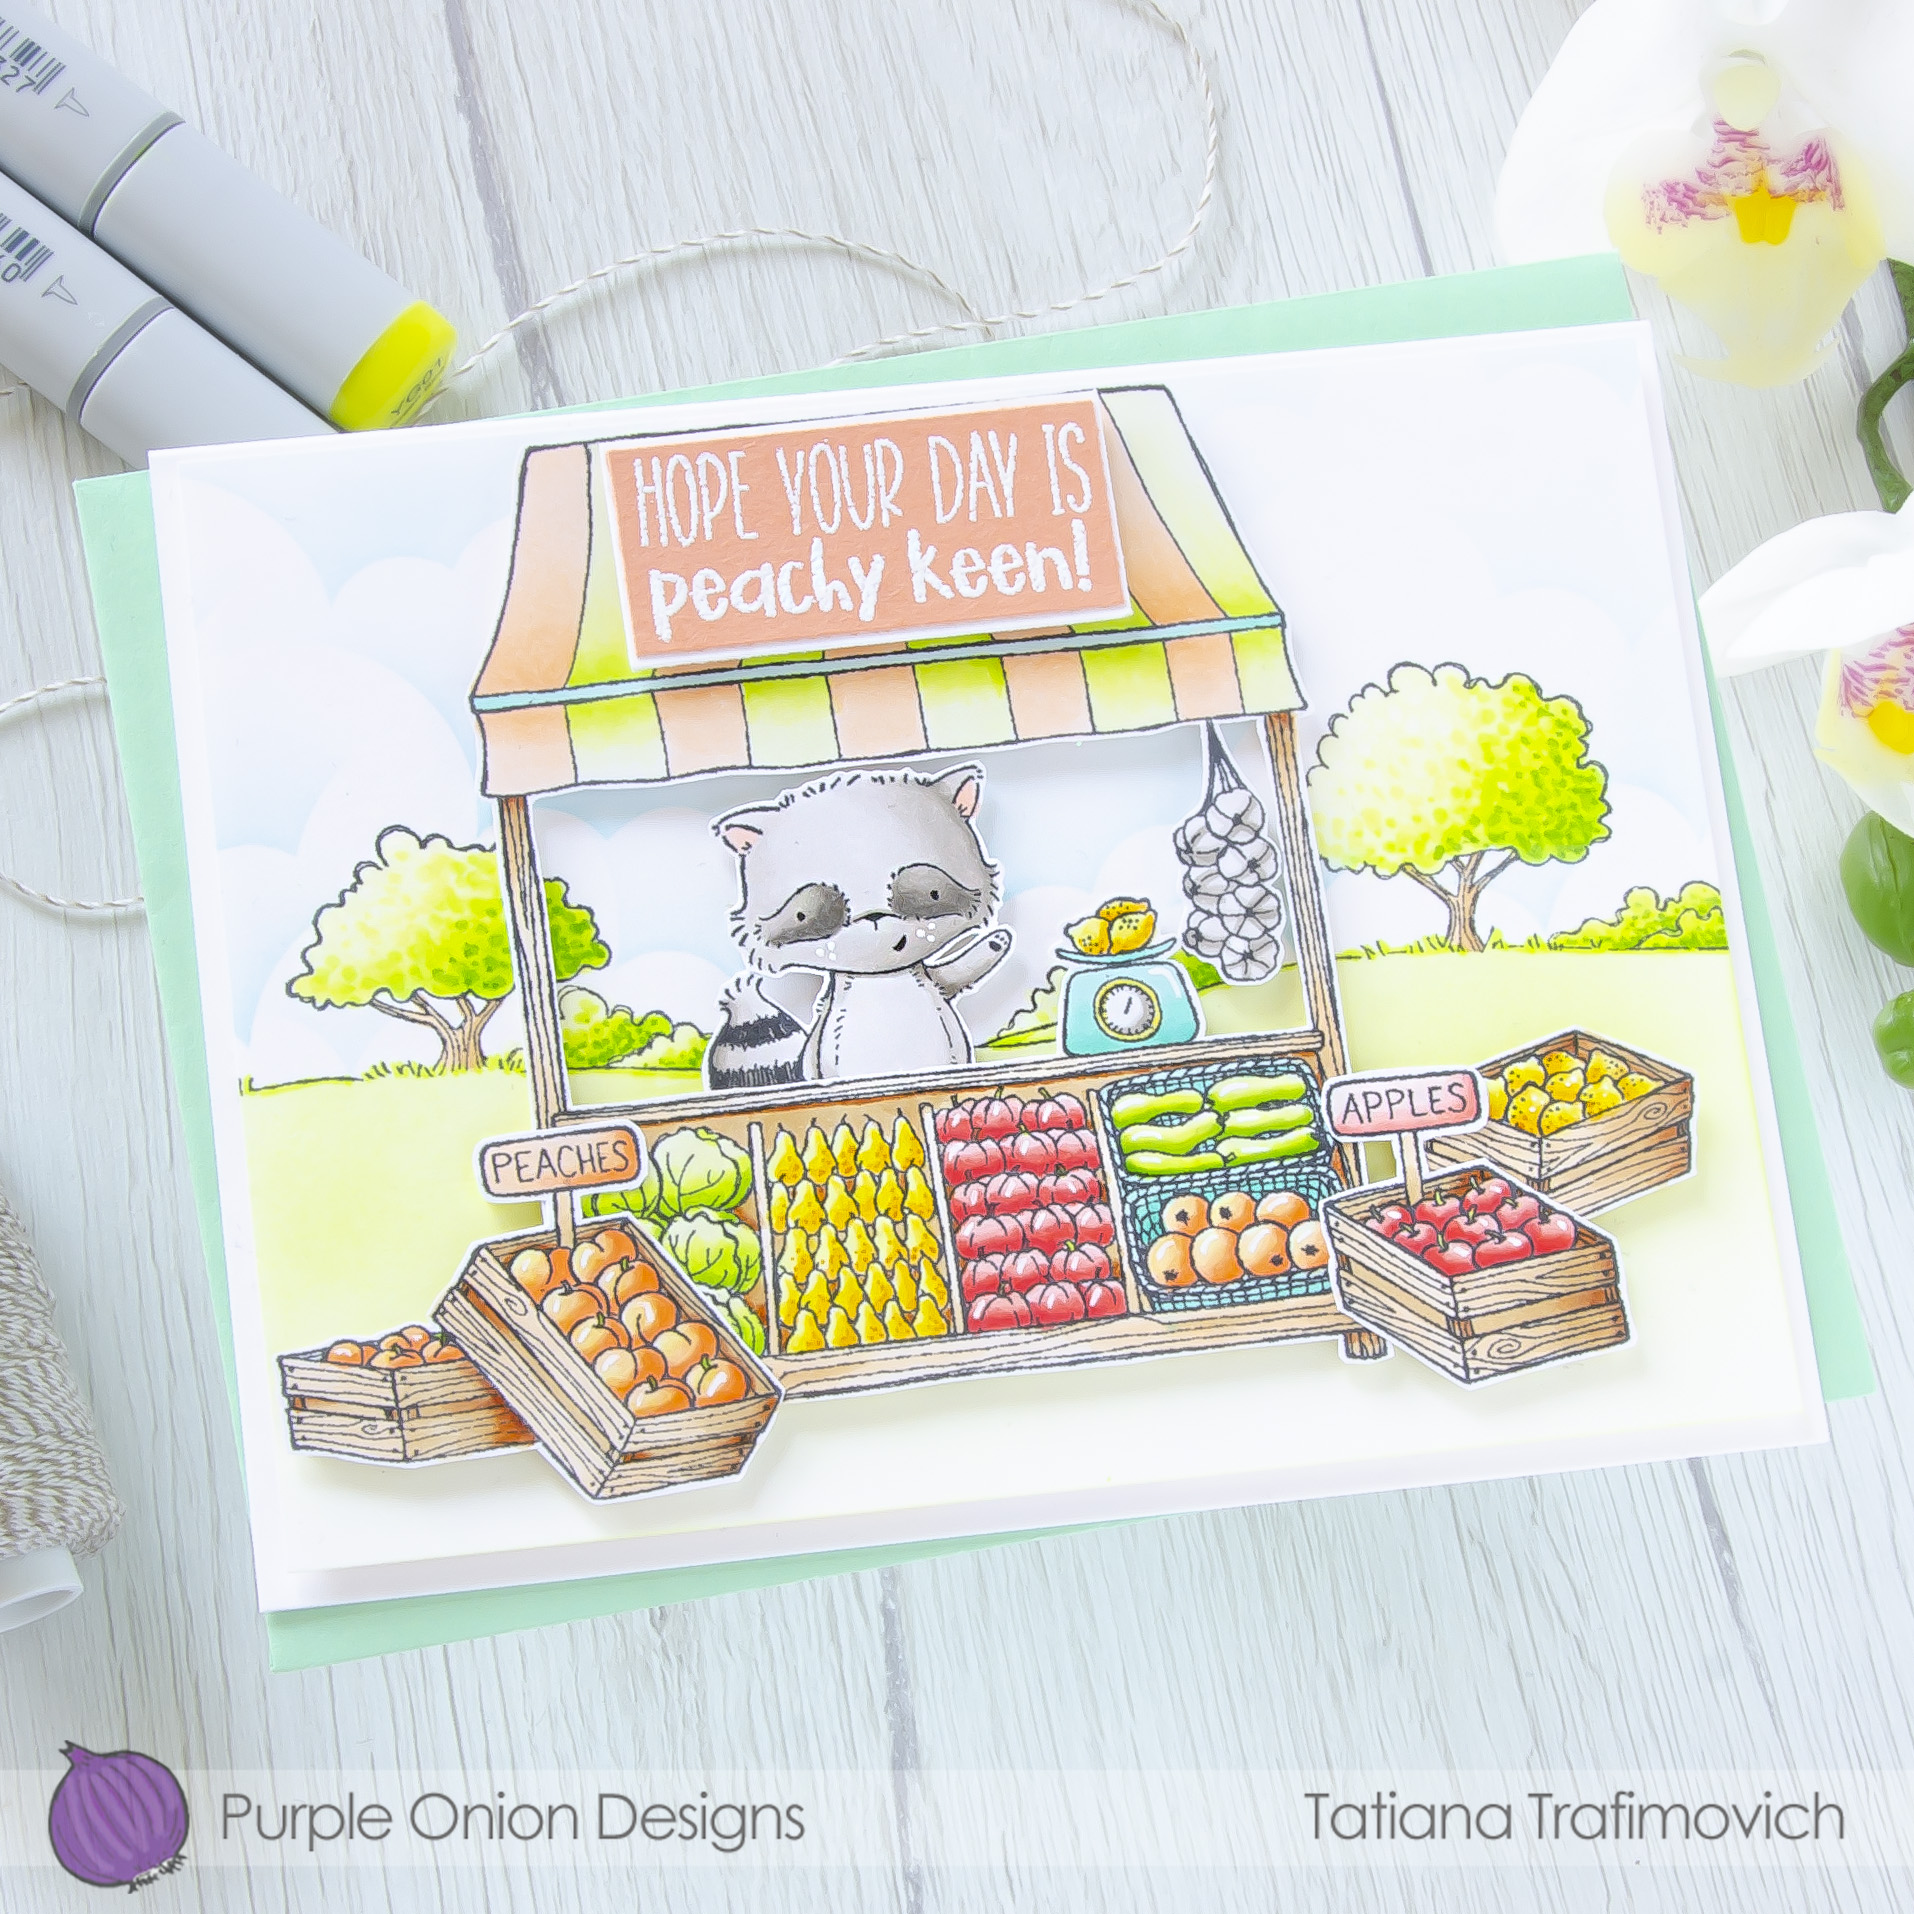 Hope Your Day Is Peachy Keen! #handmade card by Tatiana Trafimovich #tatianacraftandart - stamps by Purple Onion Designs